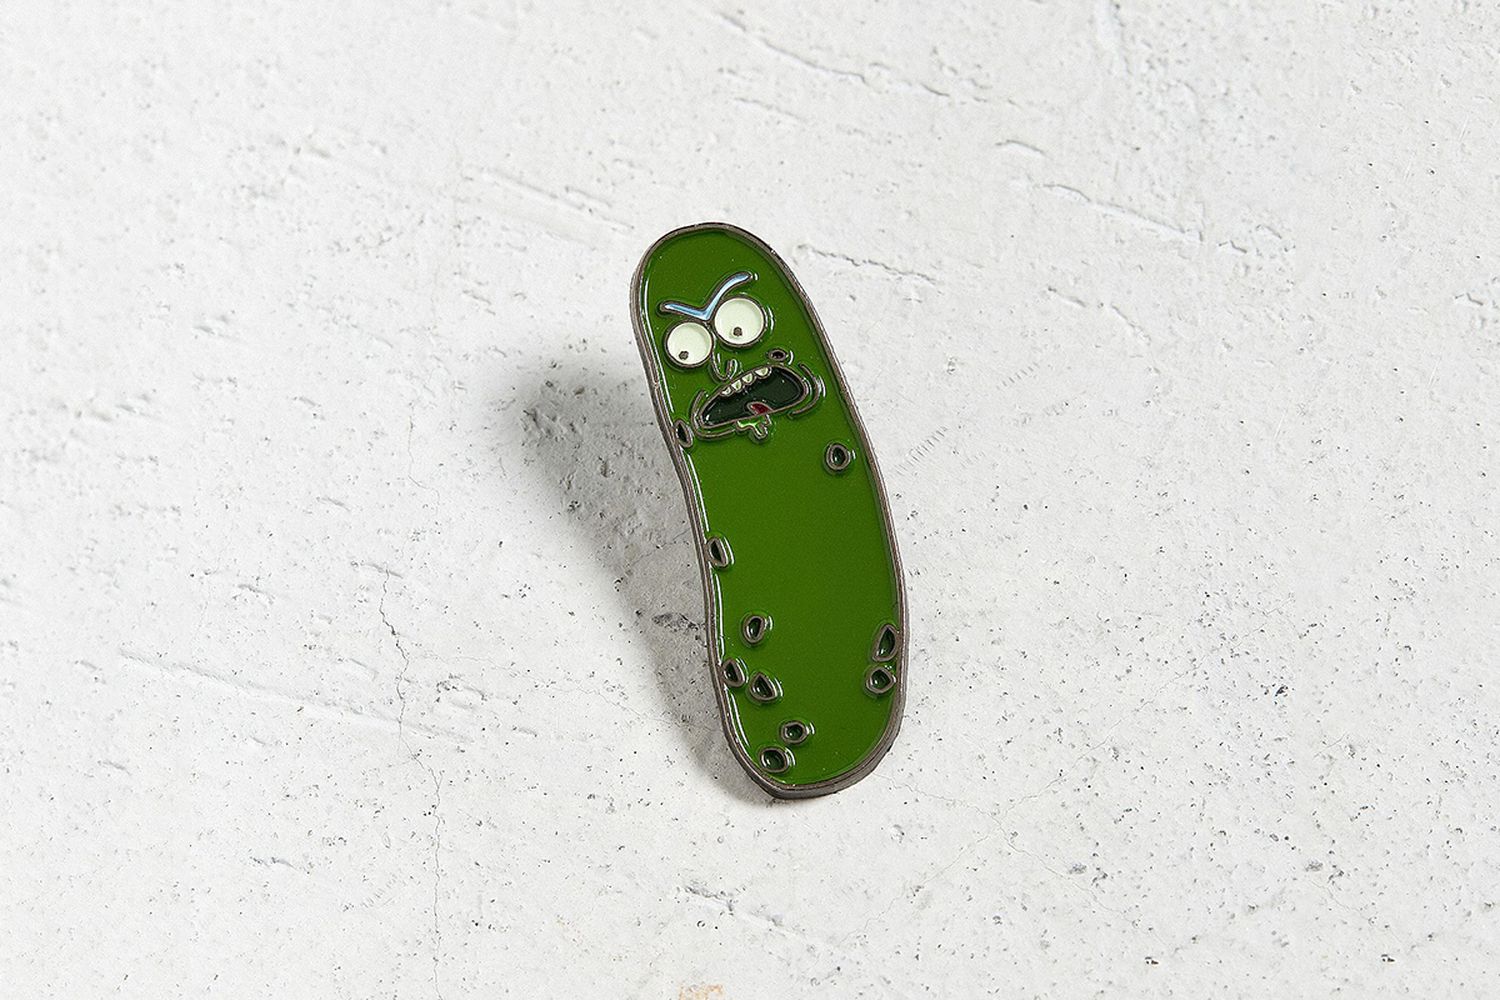 Pickle Rick Pin